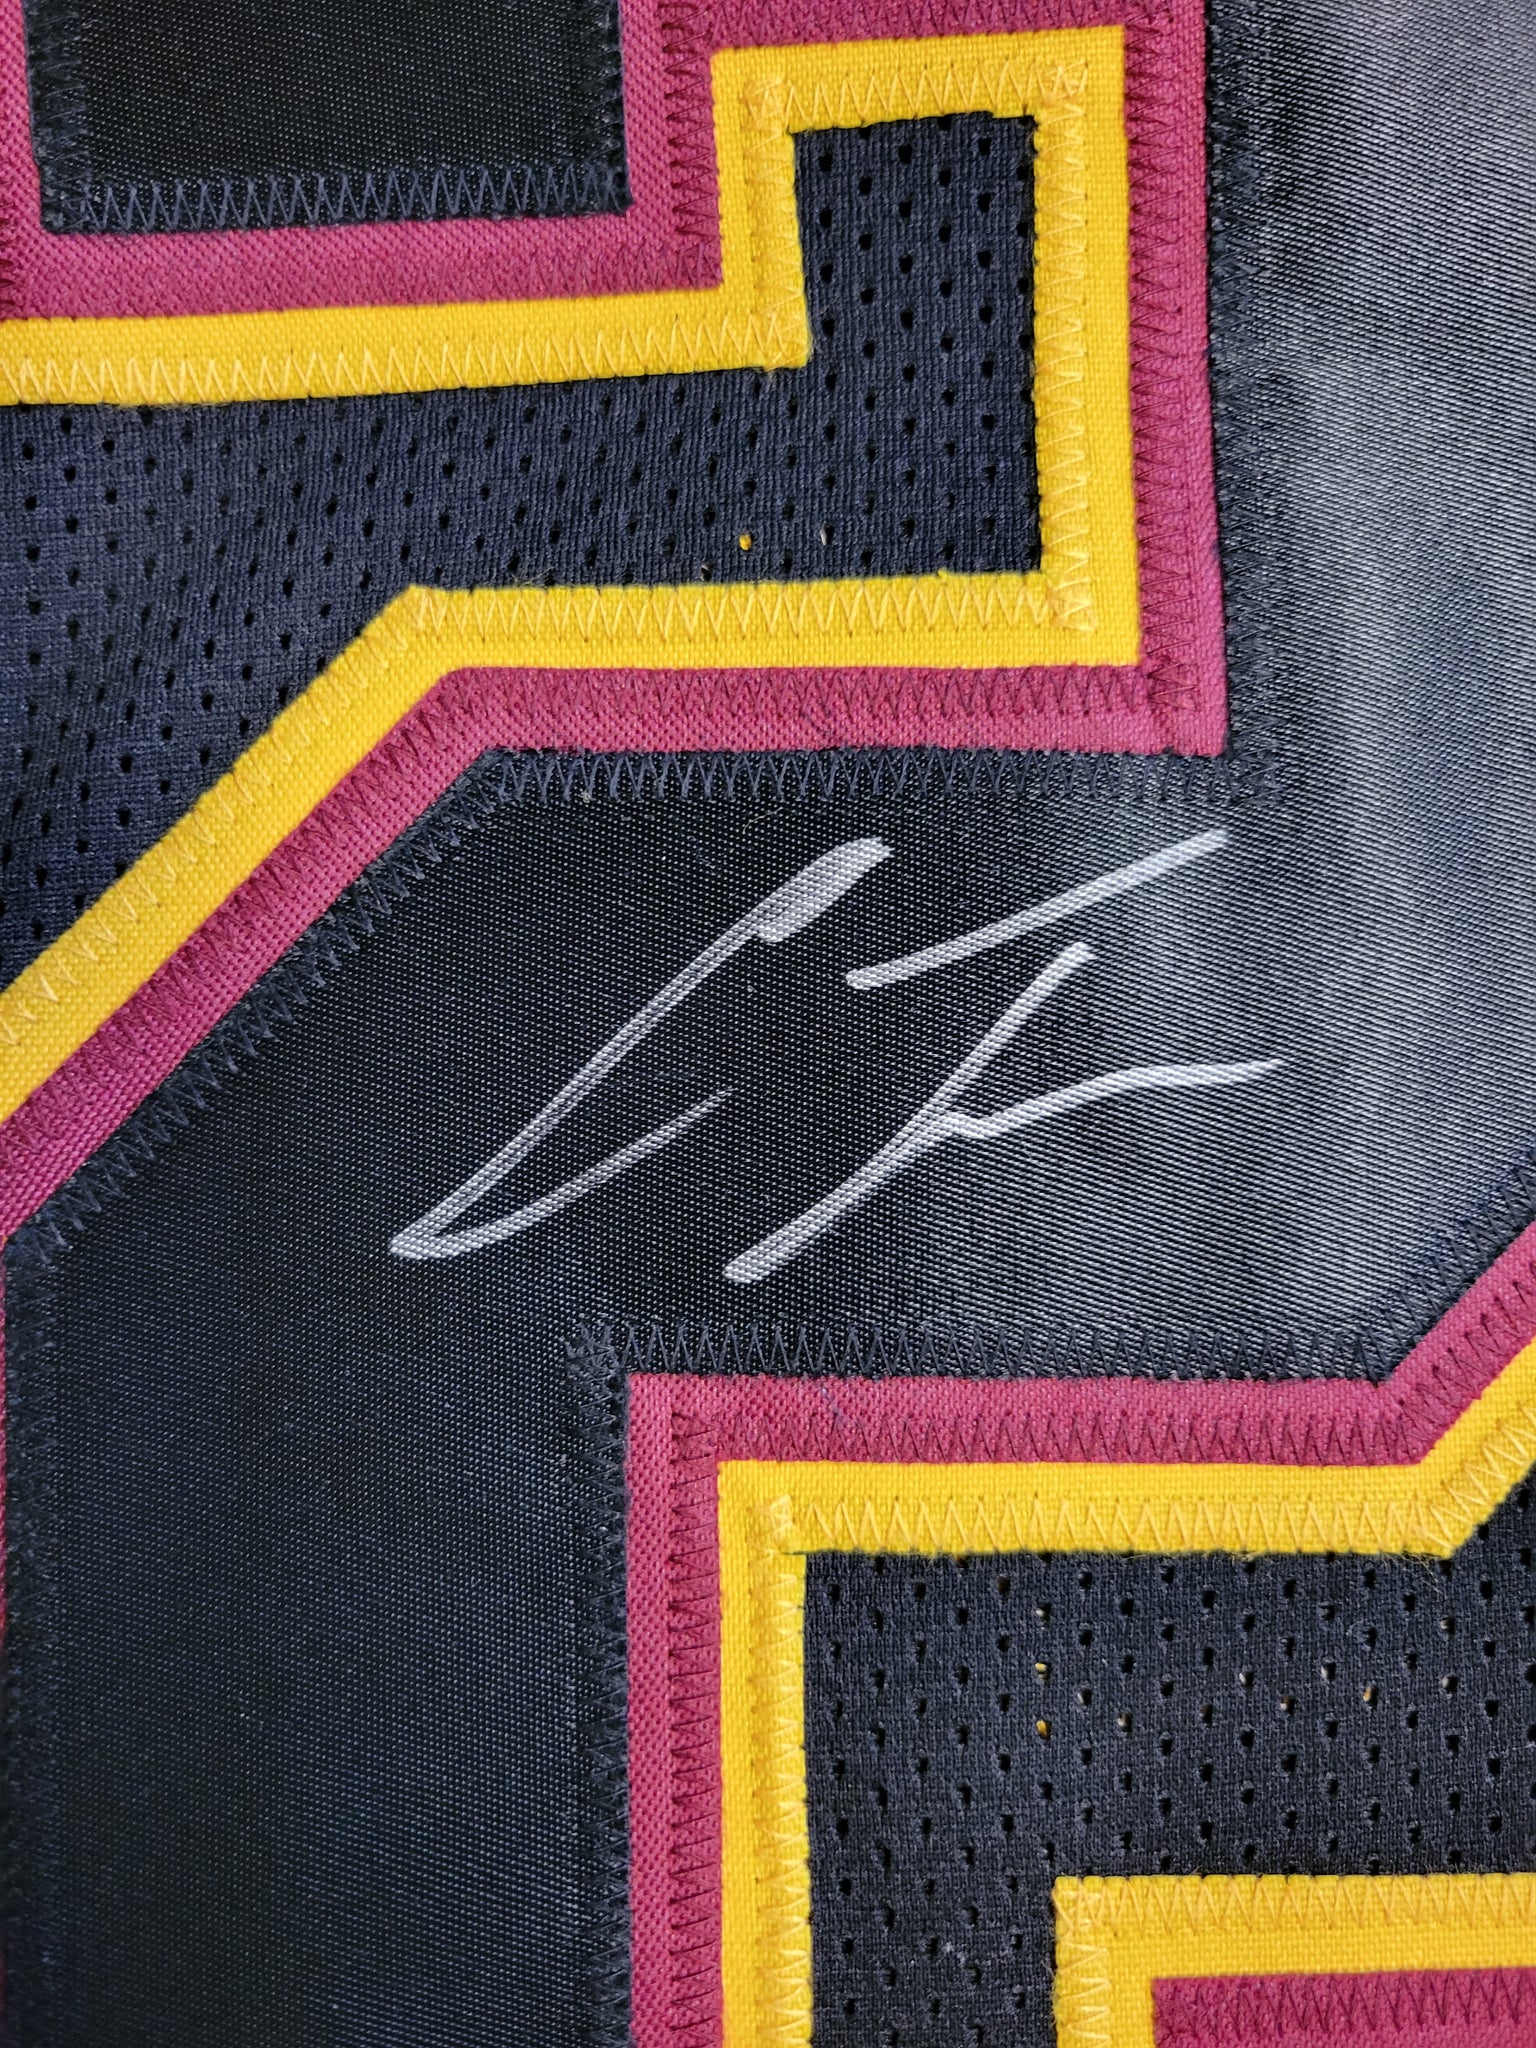 Chris Thompson Authentic Signed Pro Style Jersey Autographed JSA--